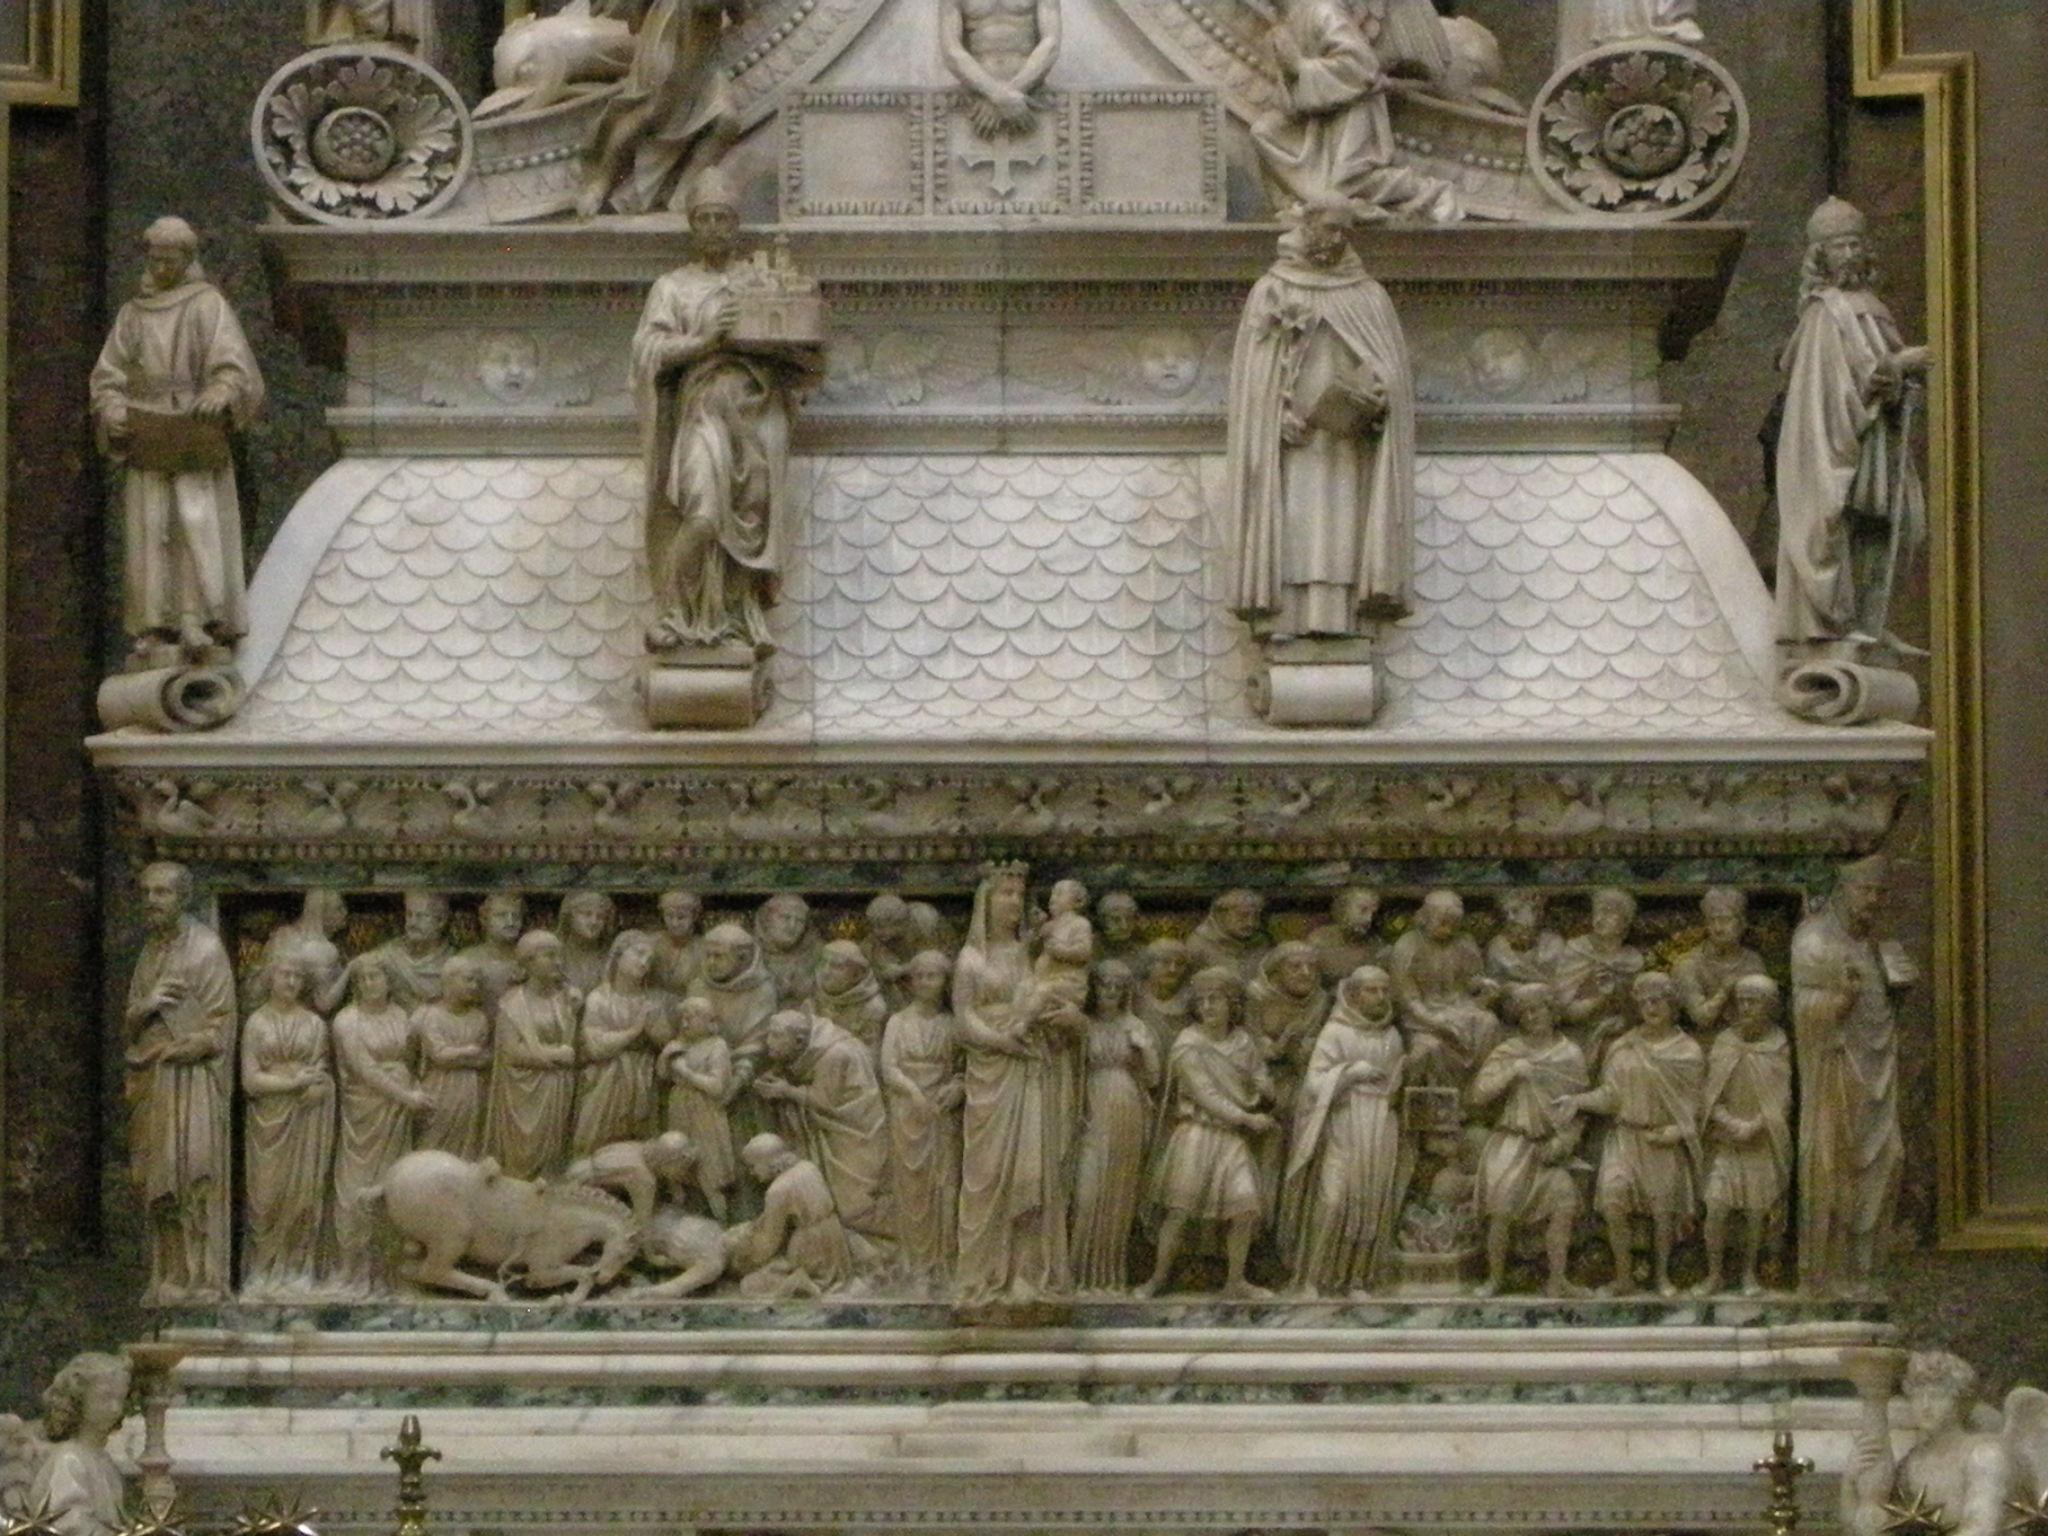 Cover image of this place Basilica di San Domenico